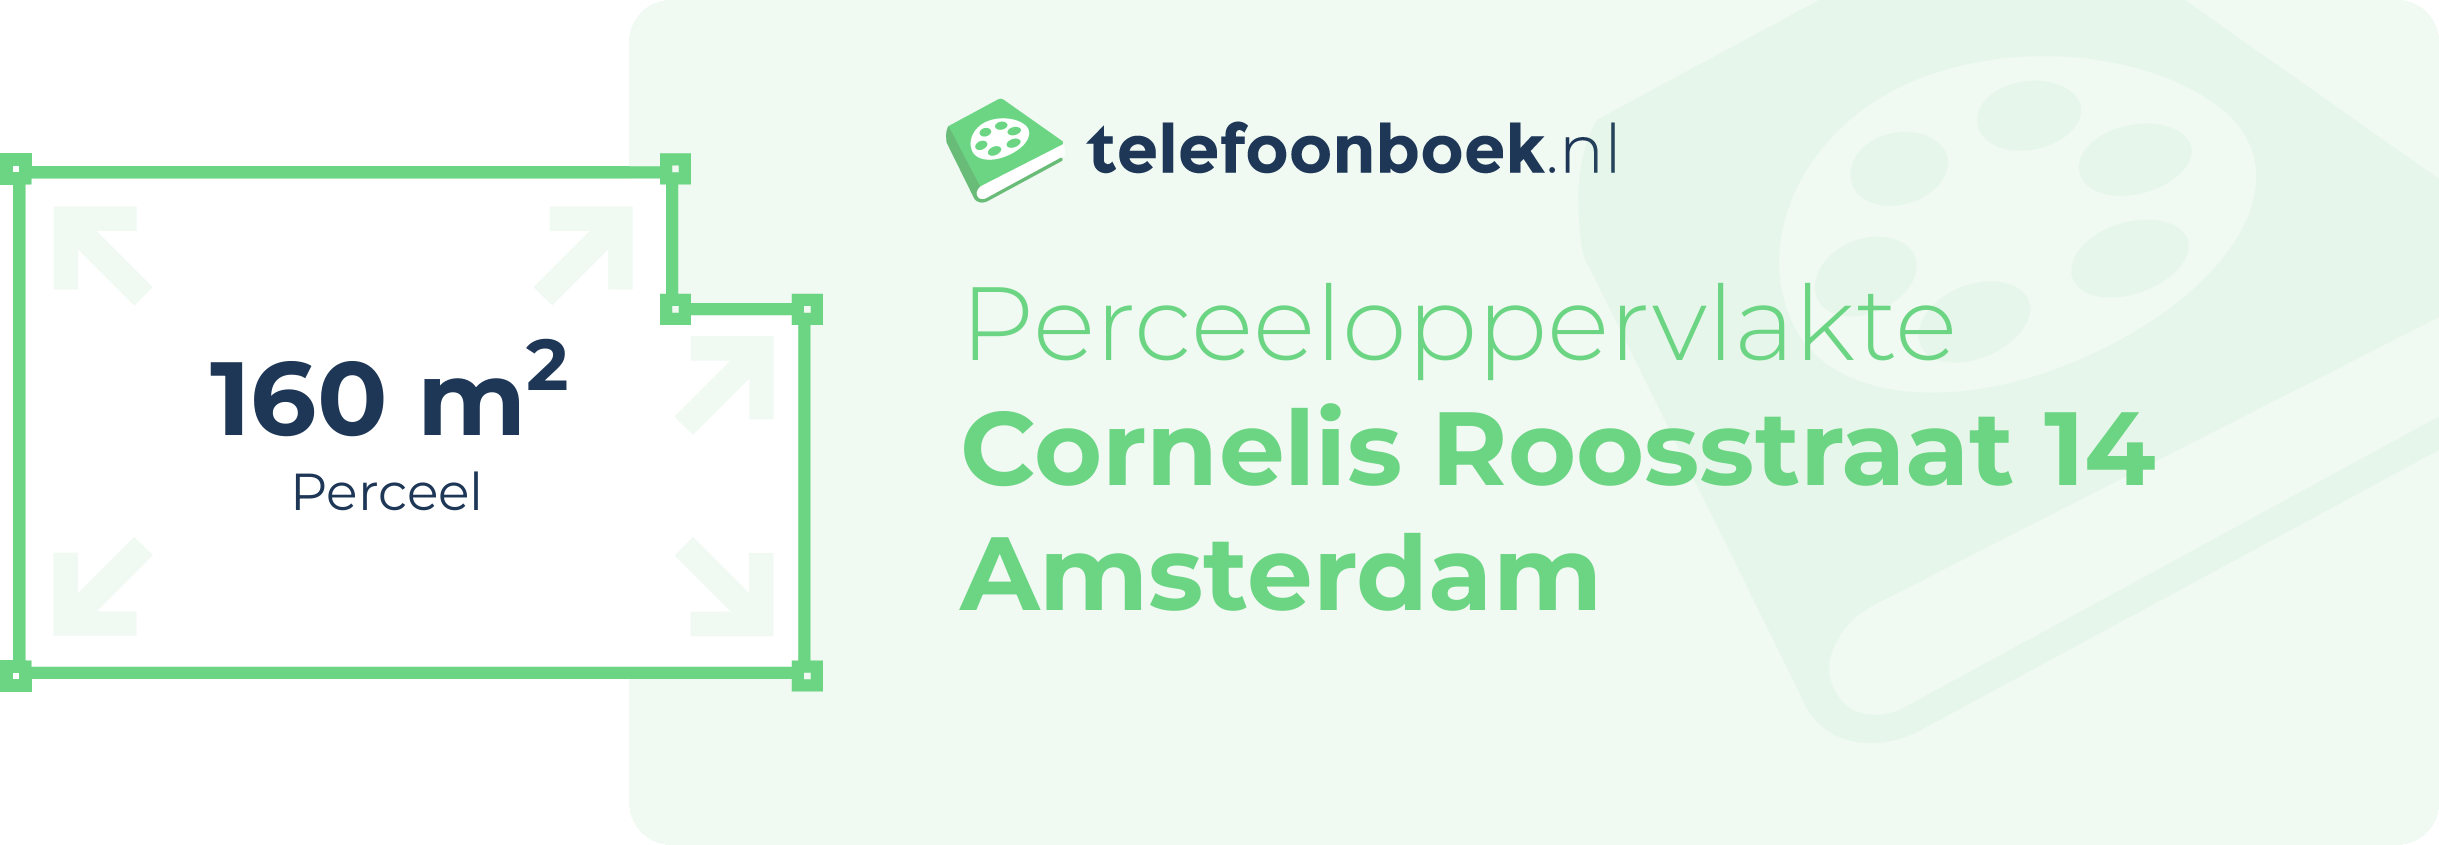 Perceeloppervlakte Cornelis Roosstraat 14 Amsterdam